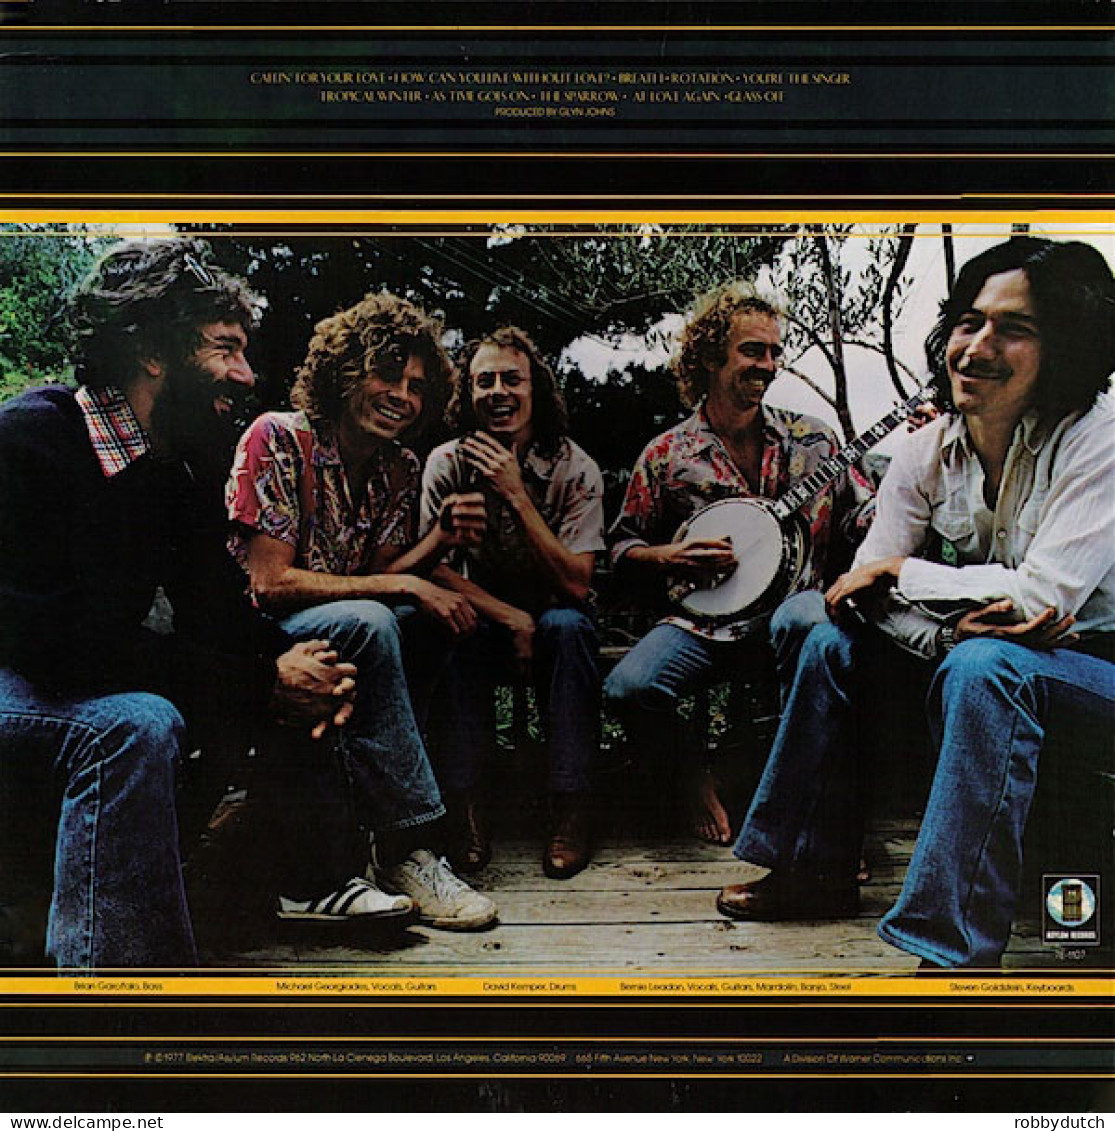 * LP * THE BERNIE LEADON - MICHAEL GEORGIADES BAND - NATURAL PROGRESSIONS (USA 1977) - Country Y Folk